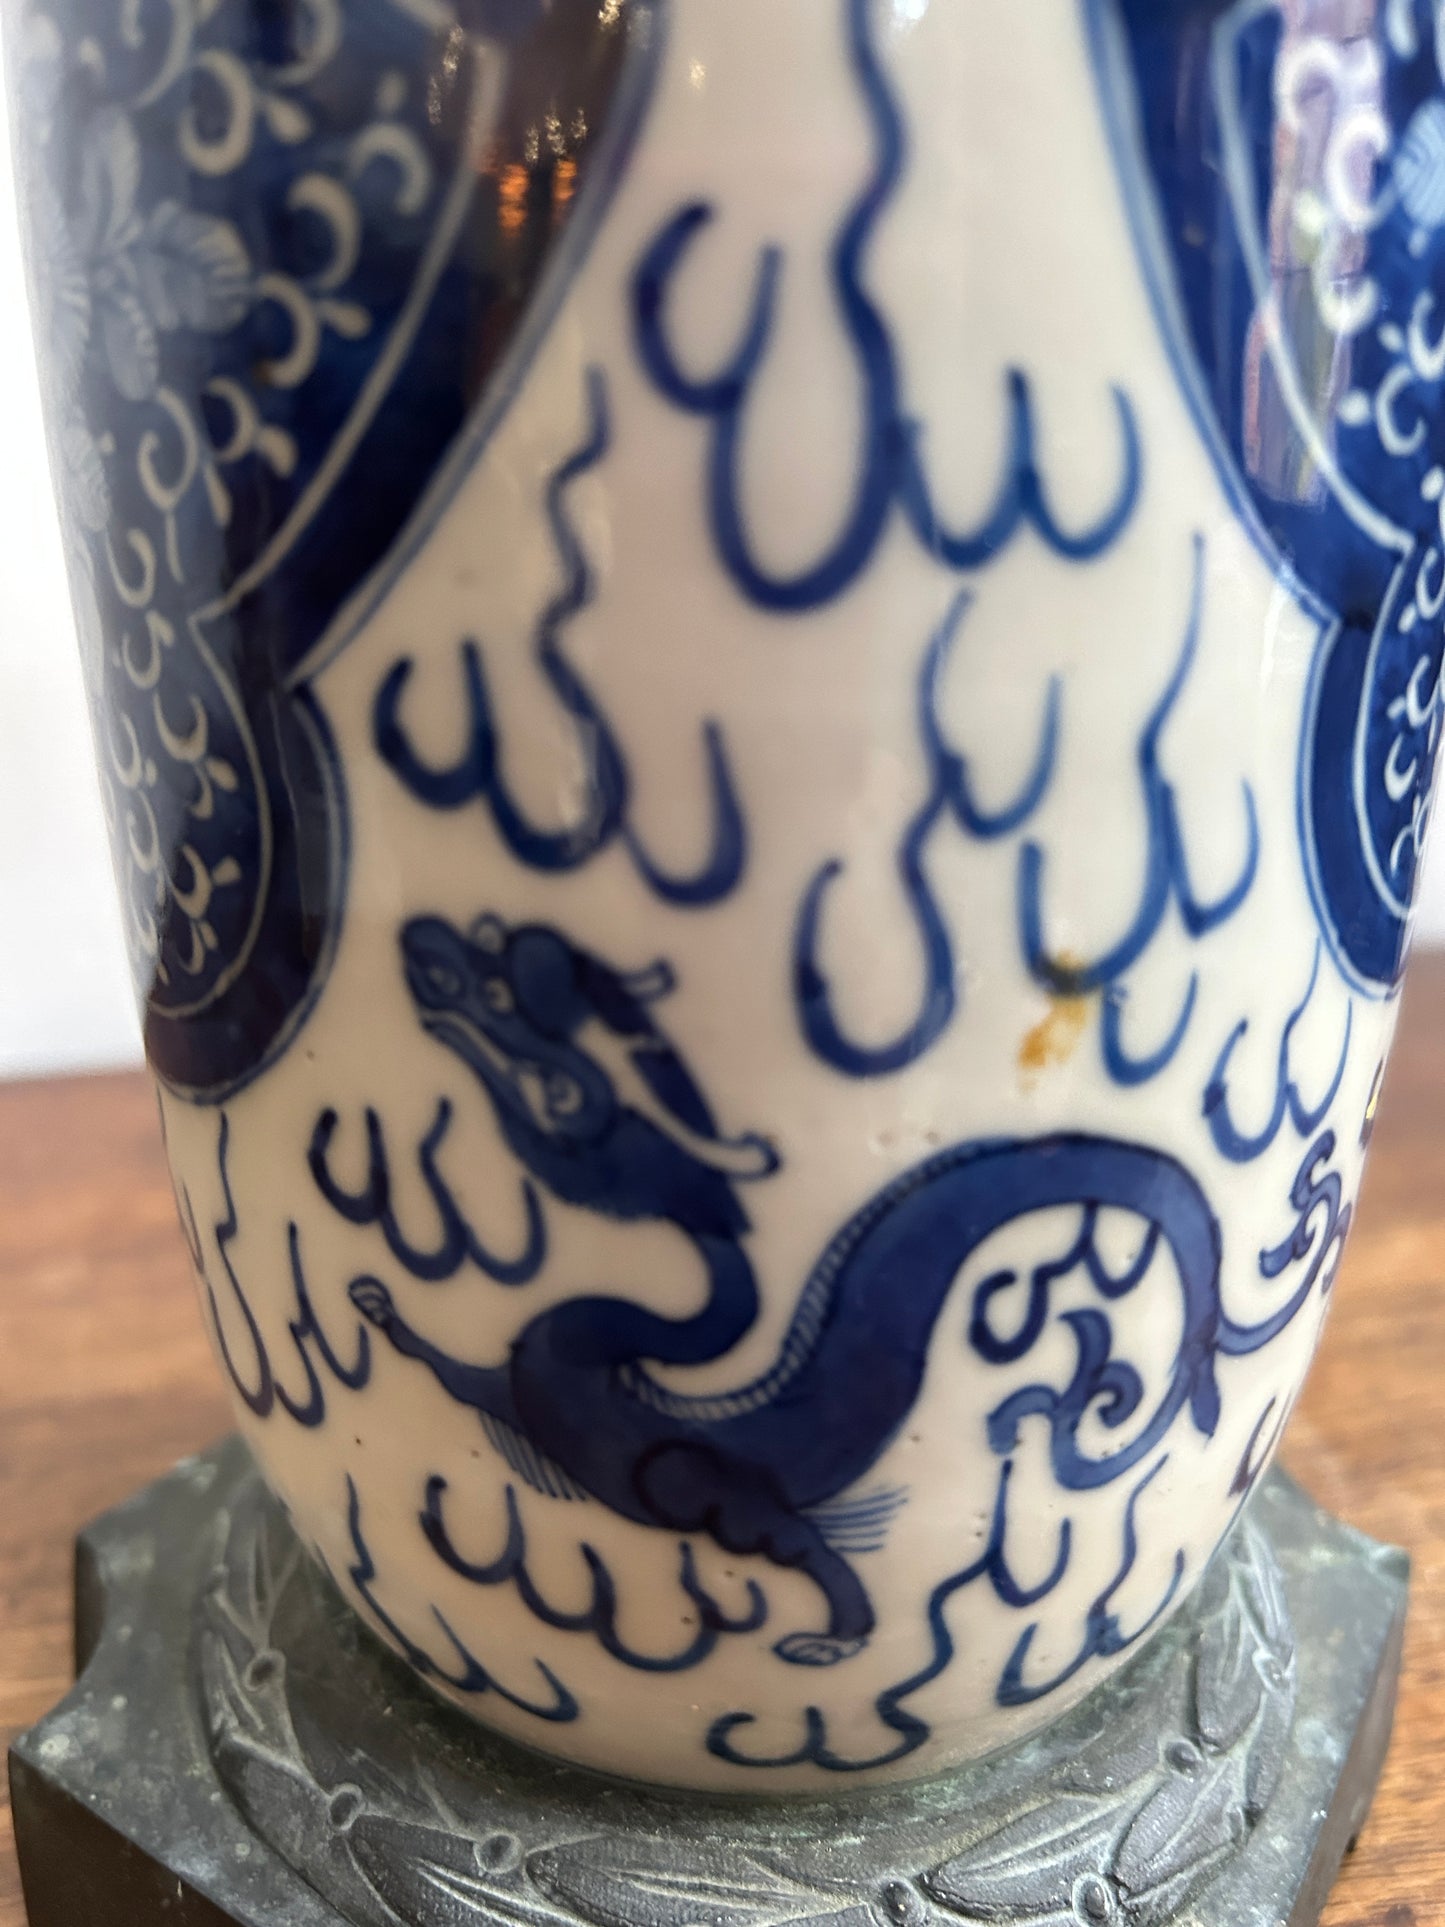 Kangxi Porcelain Vase Converted Lamp